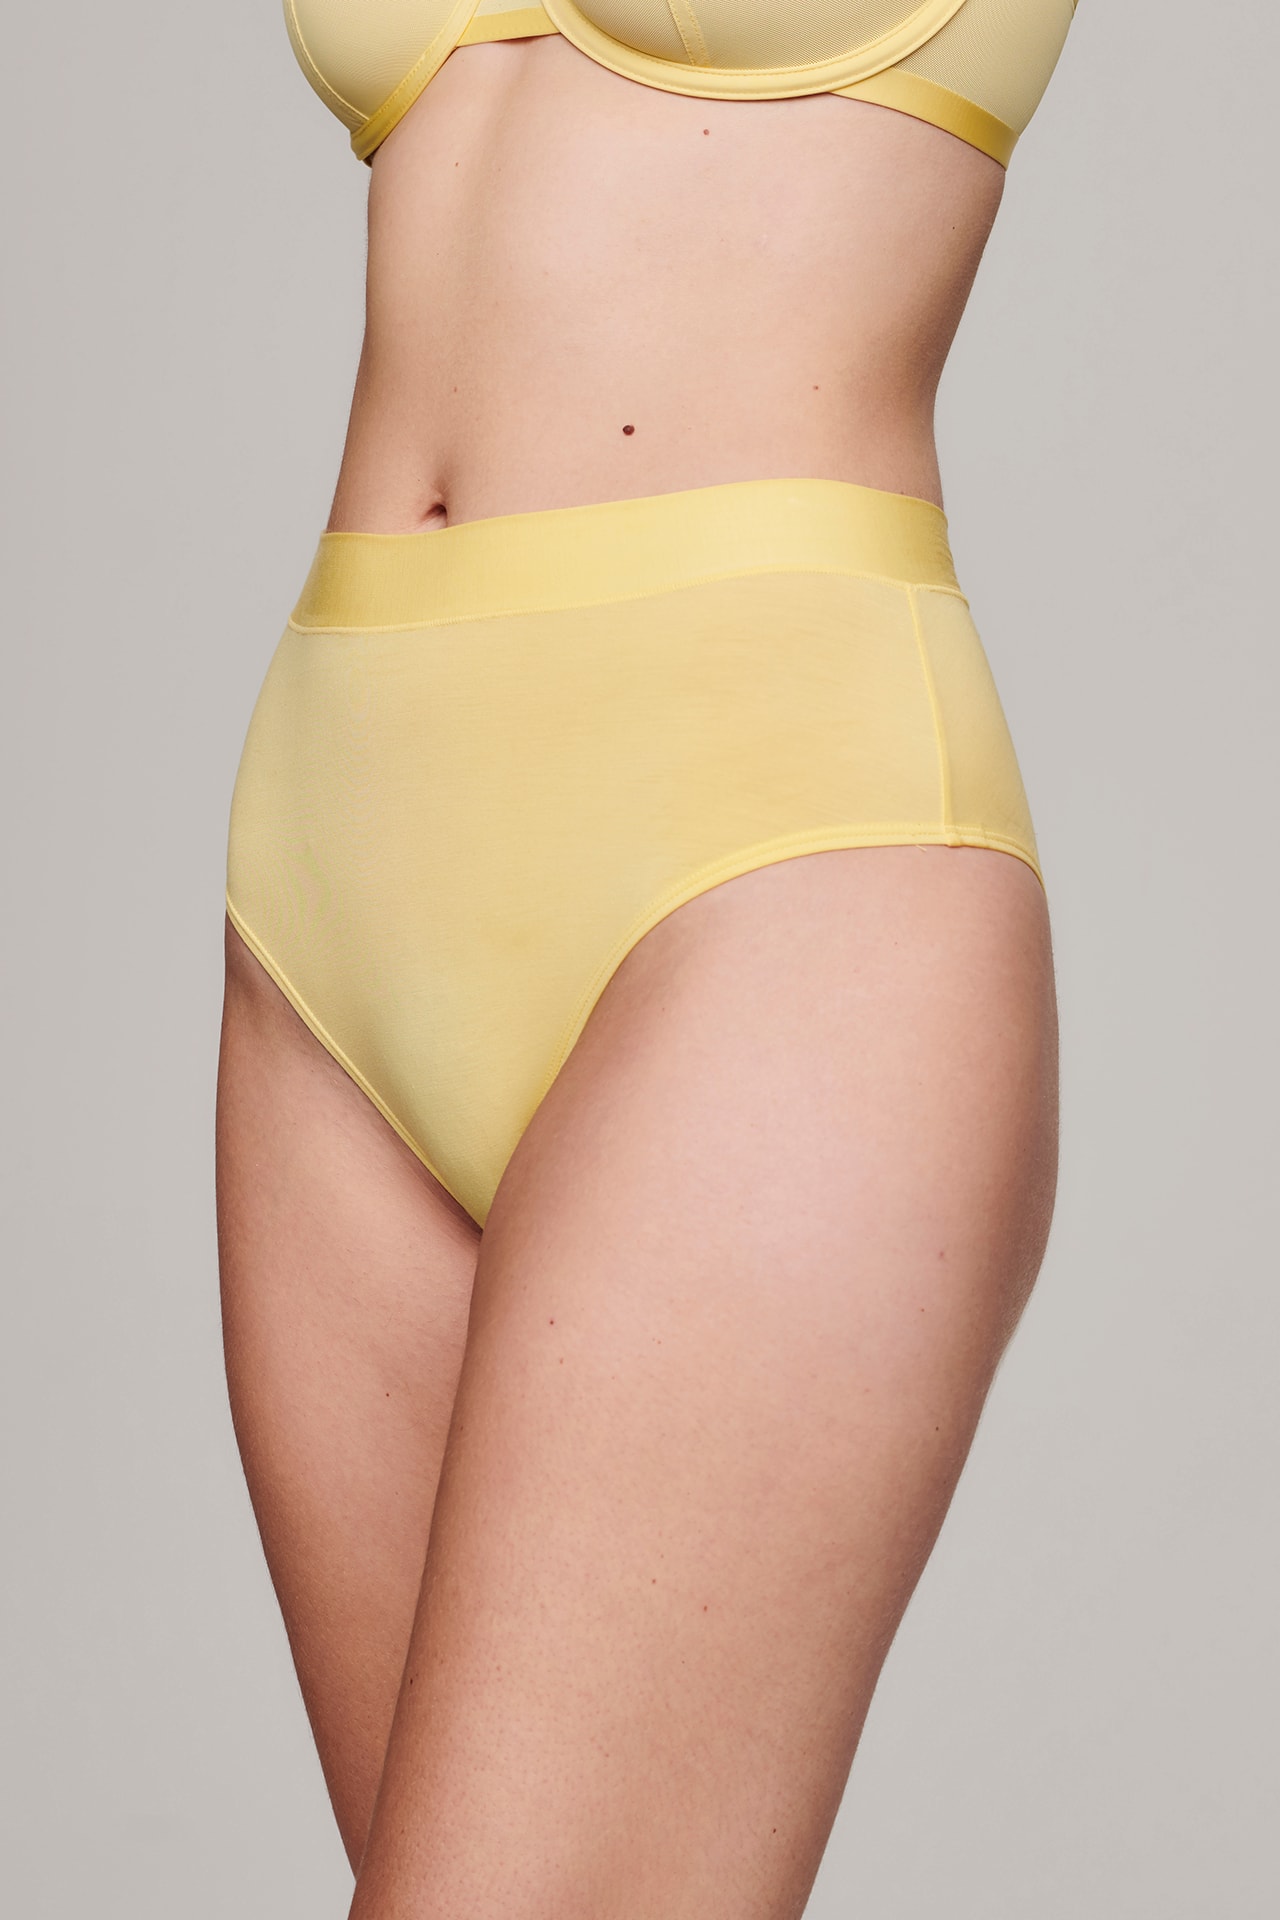 Cuup Citrine Pastel Yellow The Highwaist Panties Underwear Lingerie